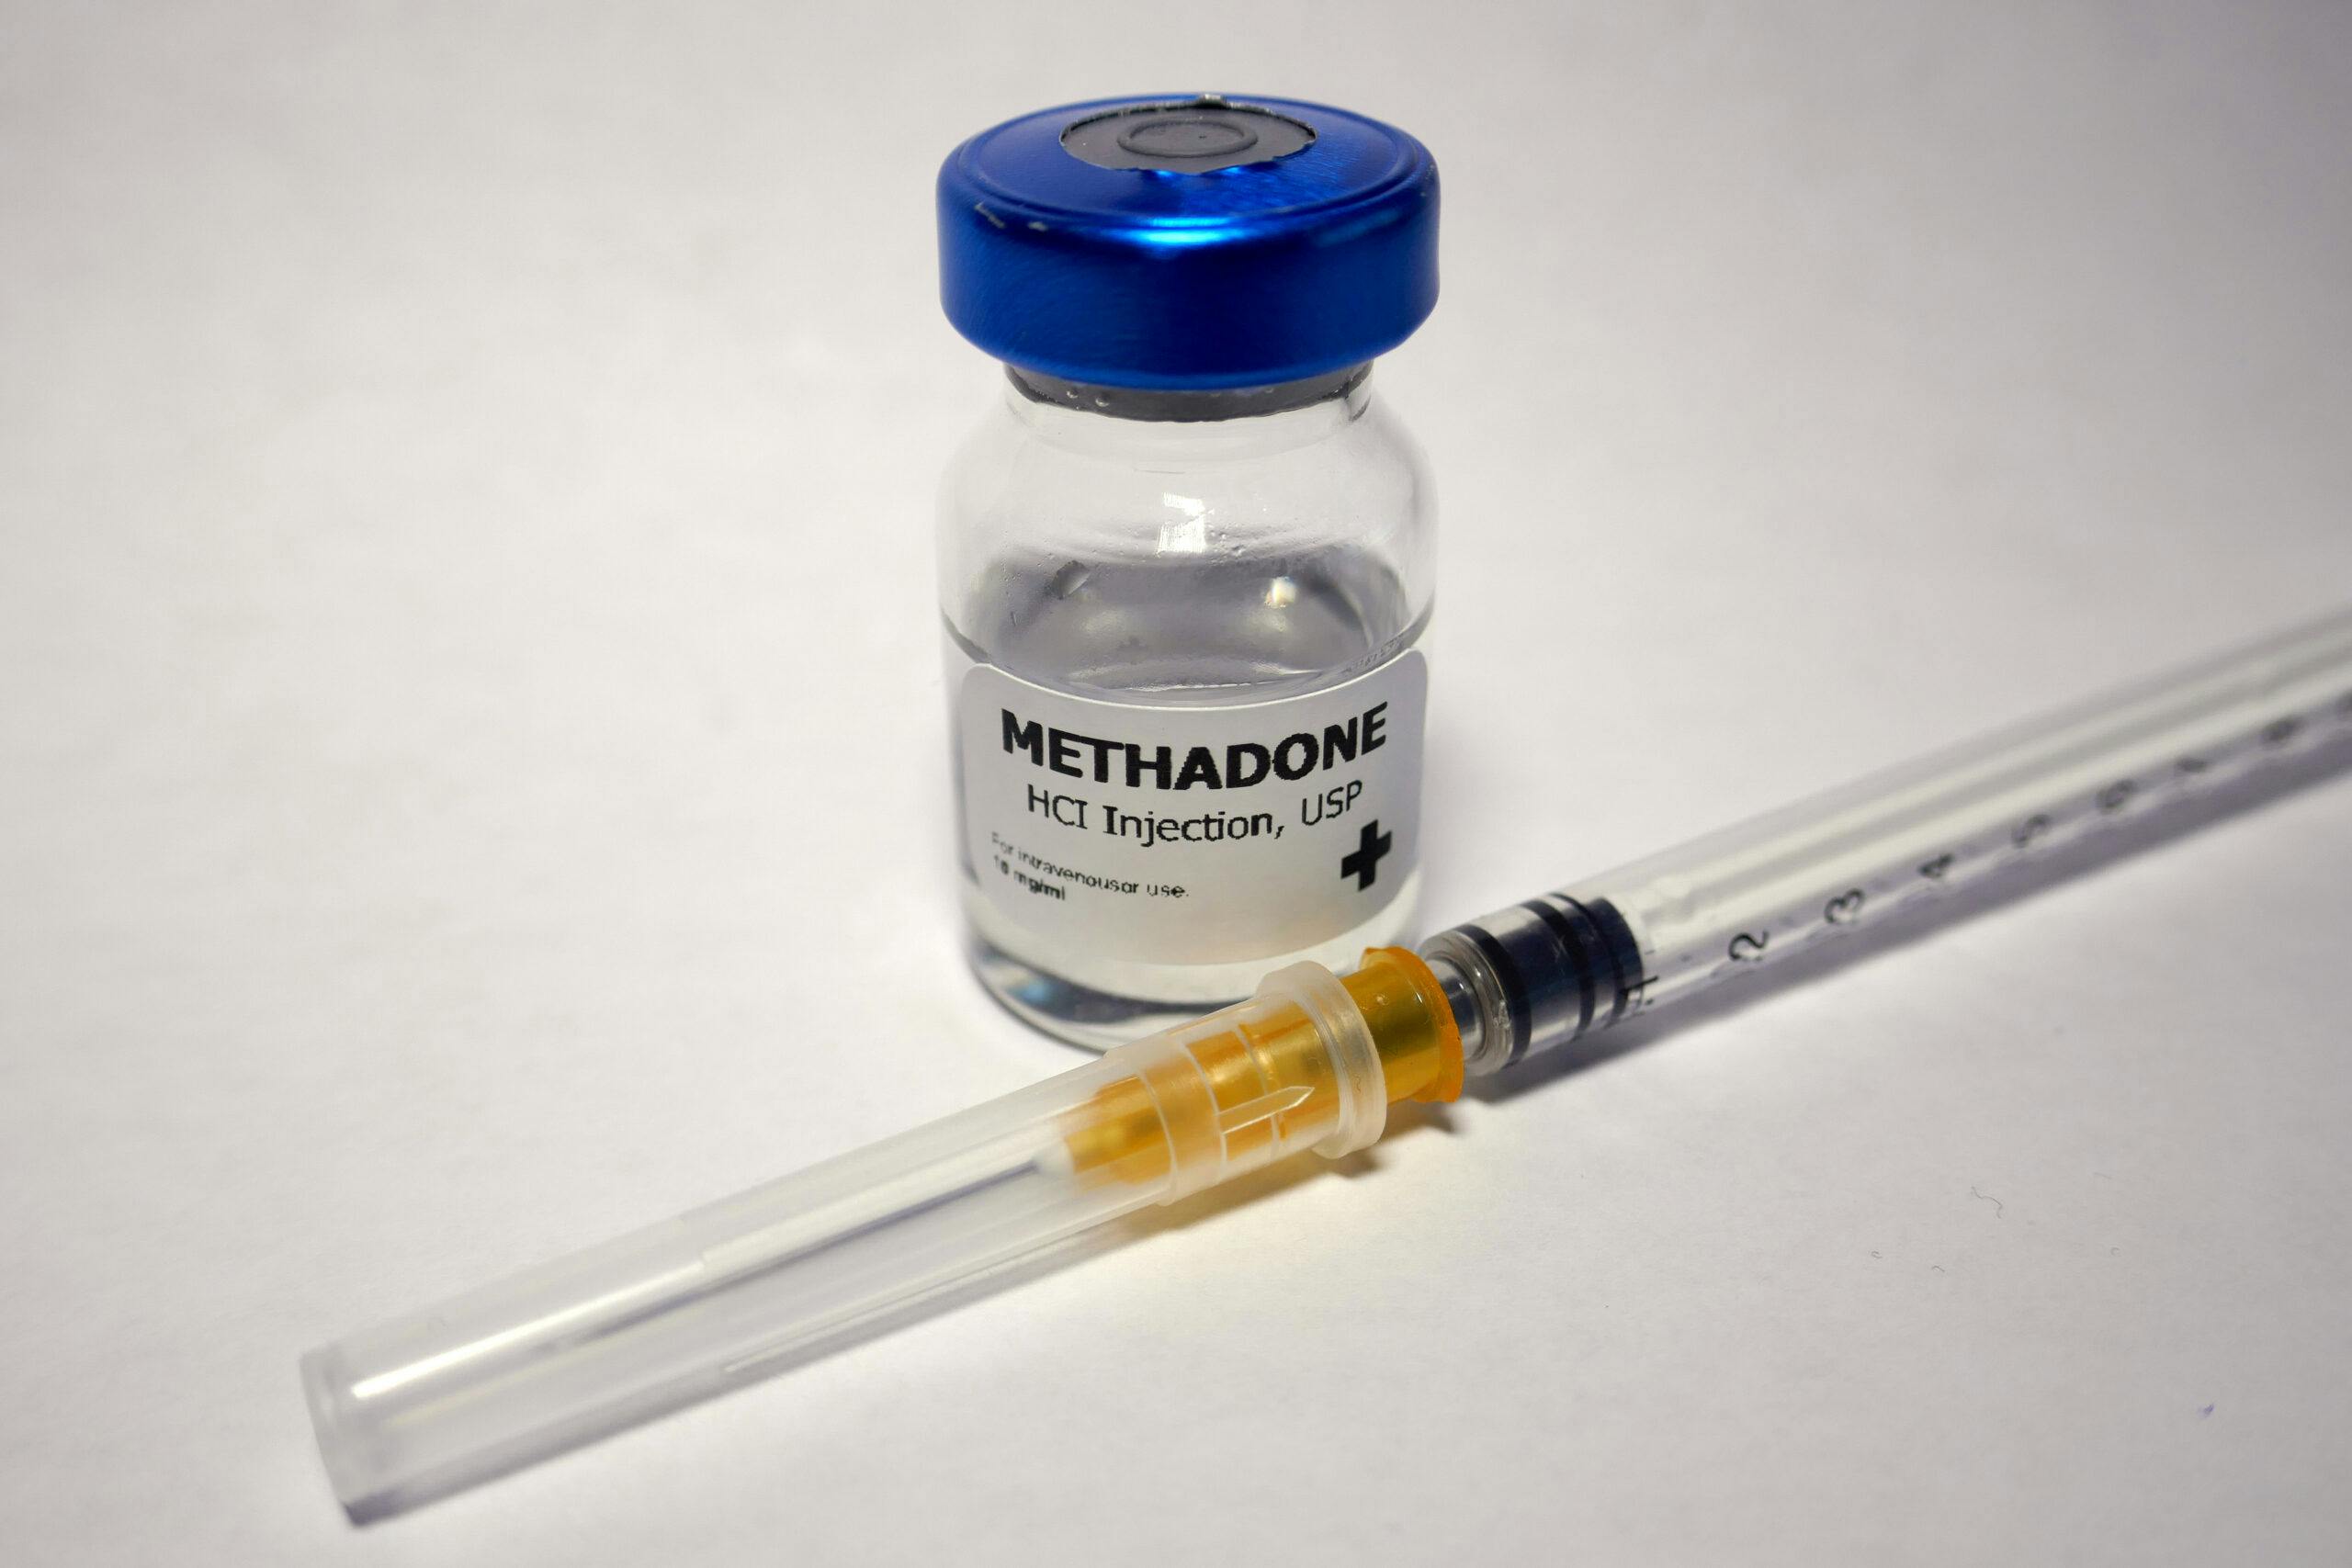 methadone in vial and needle